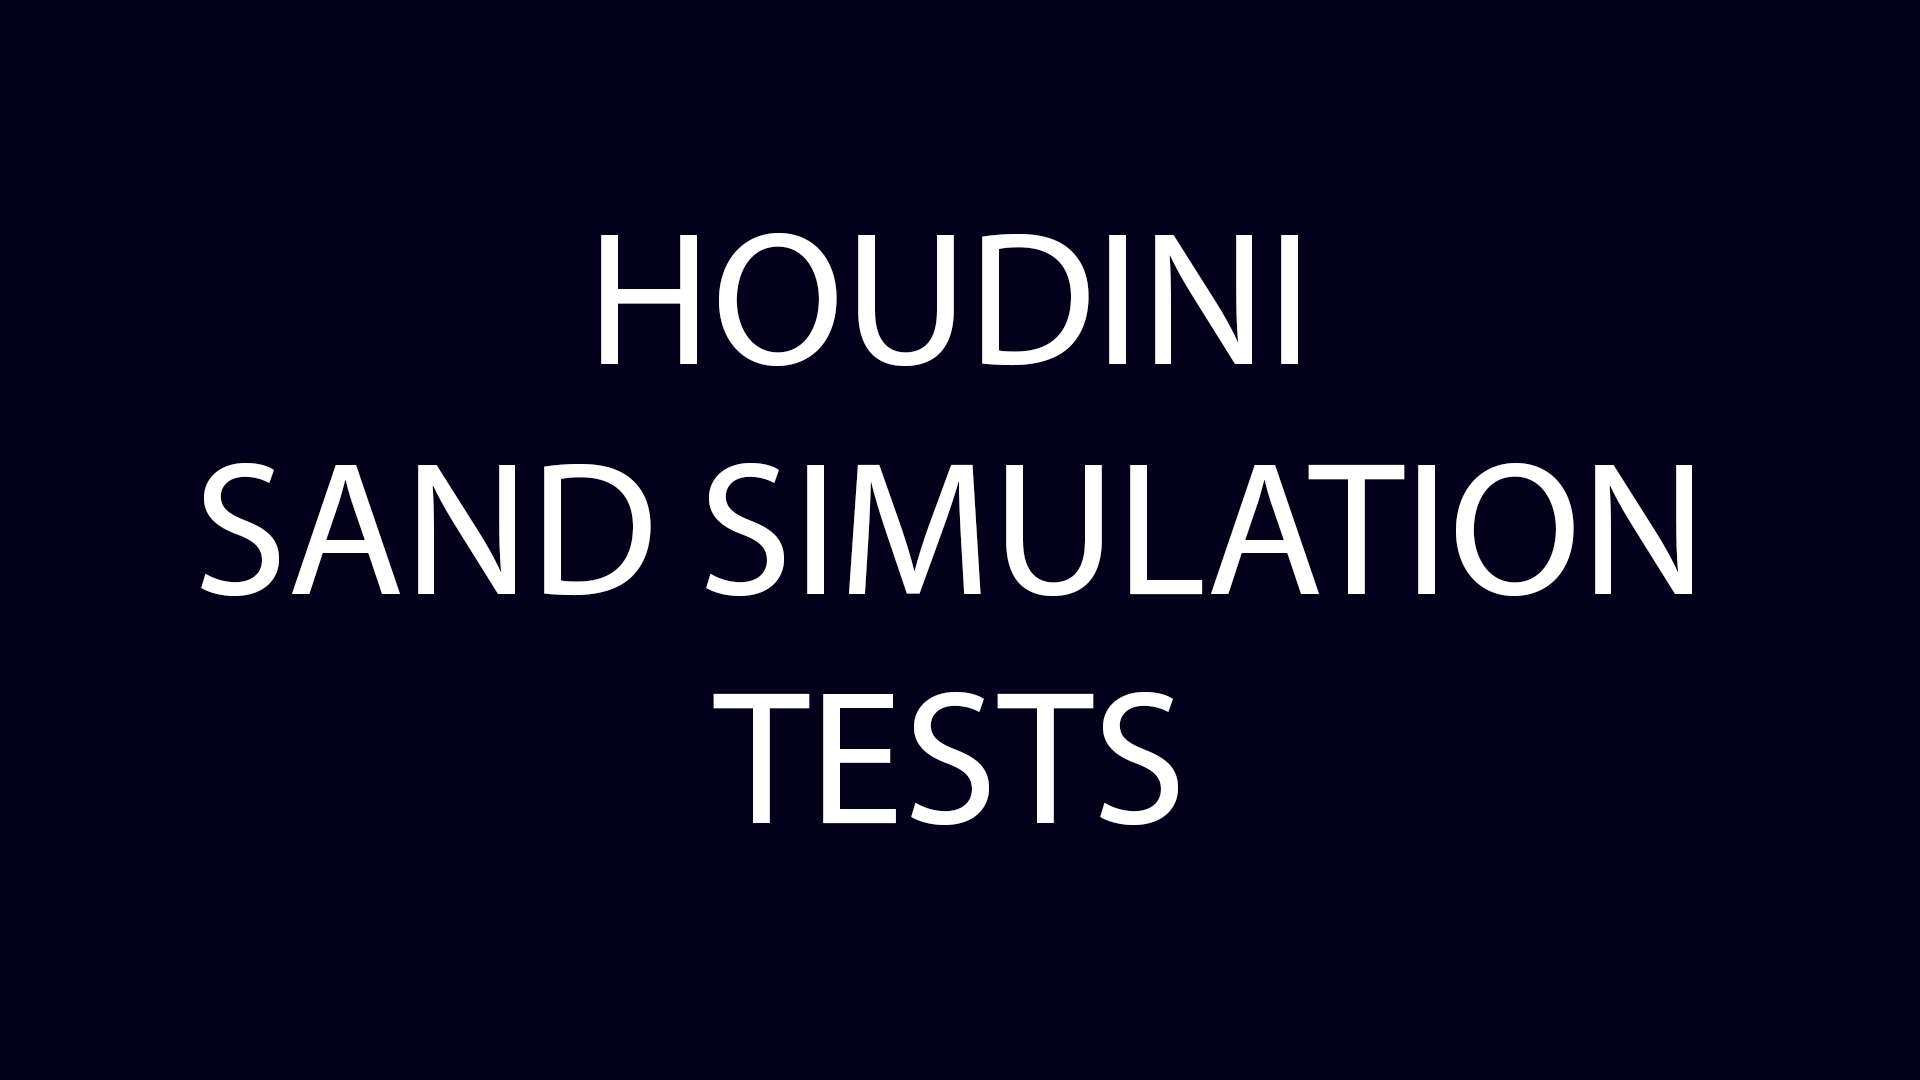 Houdini Sand Simulation tests